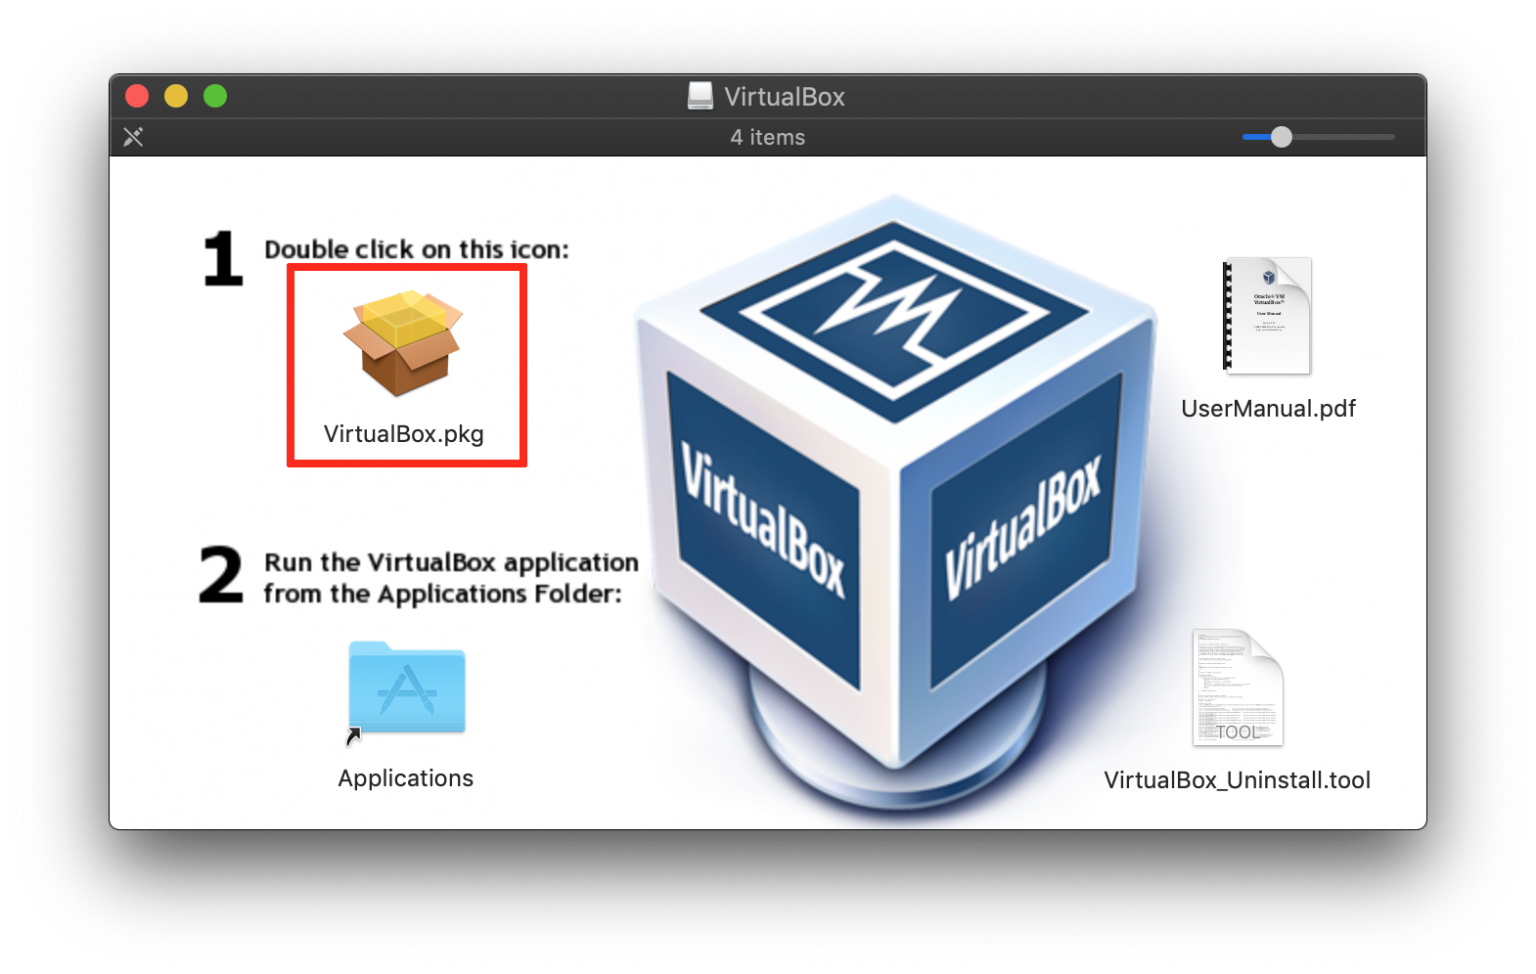 installing docker on mac or virtualbox